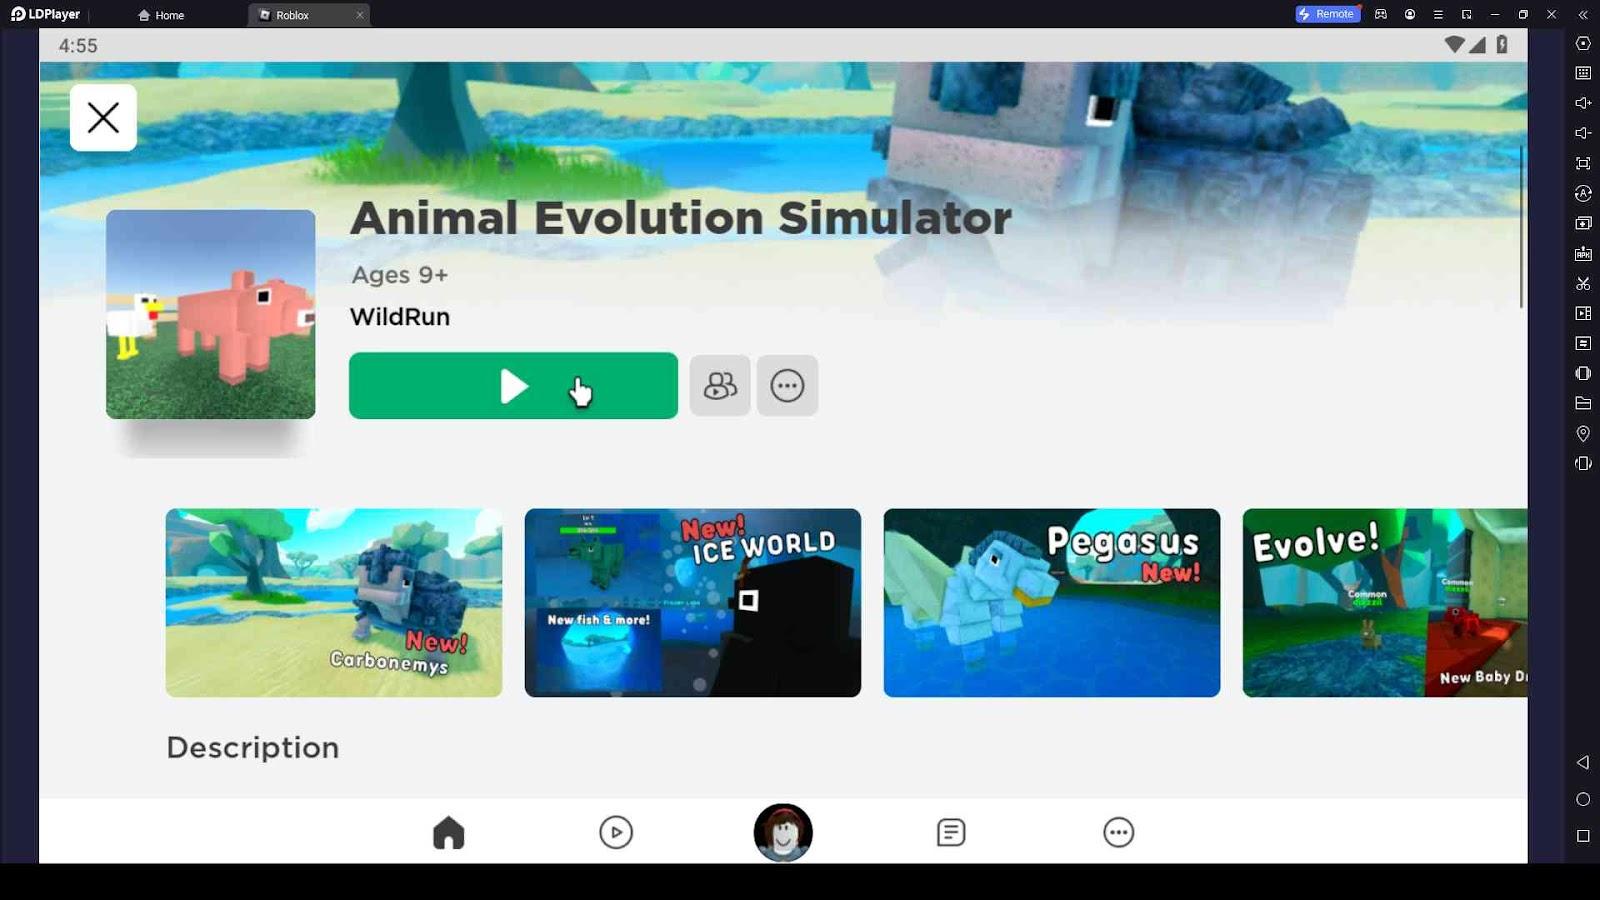 Animal Evolution Simulator codes to redeem free levels & EXP